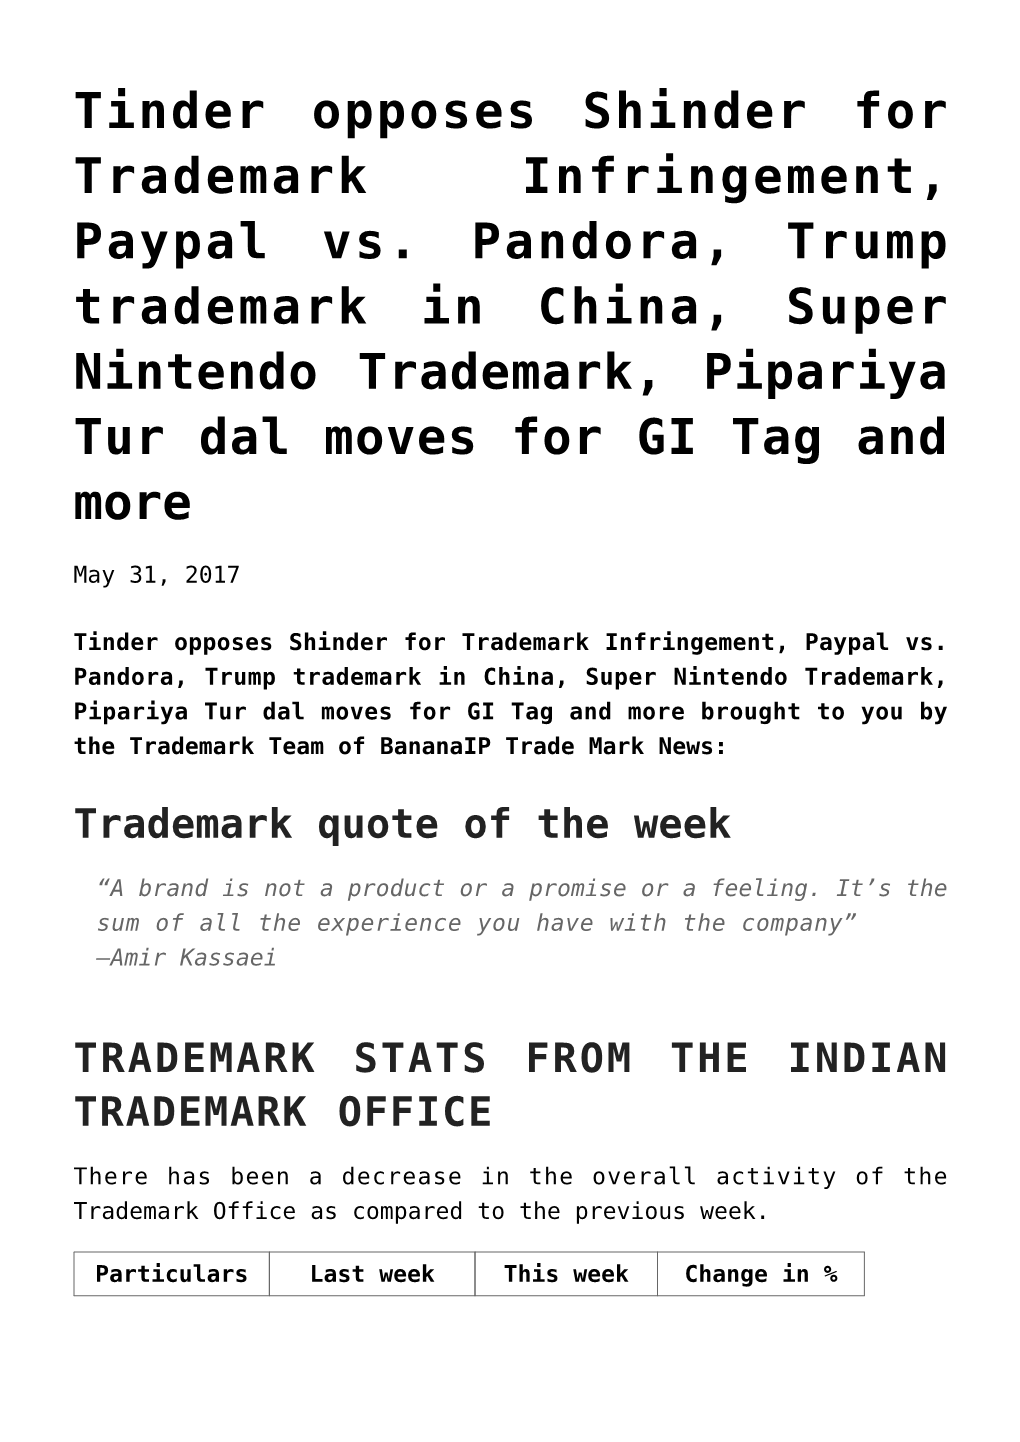 Tinder Opposes Shinder for Trademark Infringement, Paypal Vs